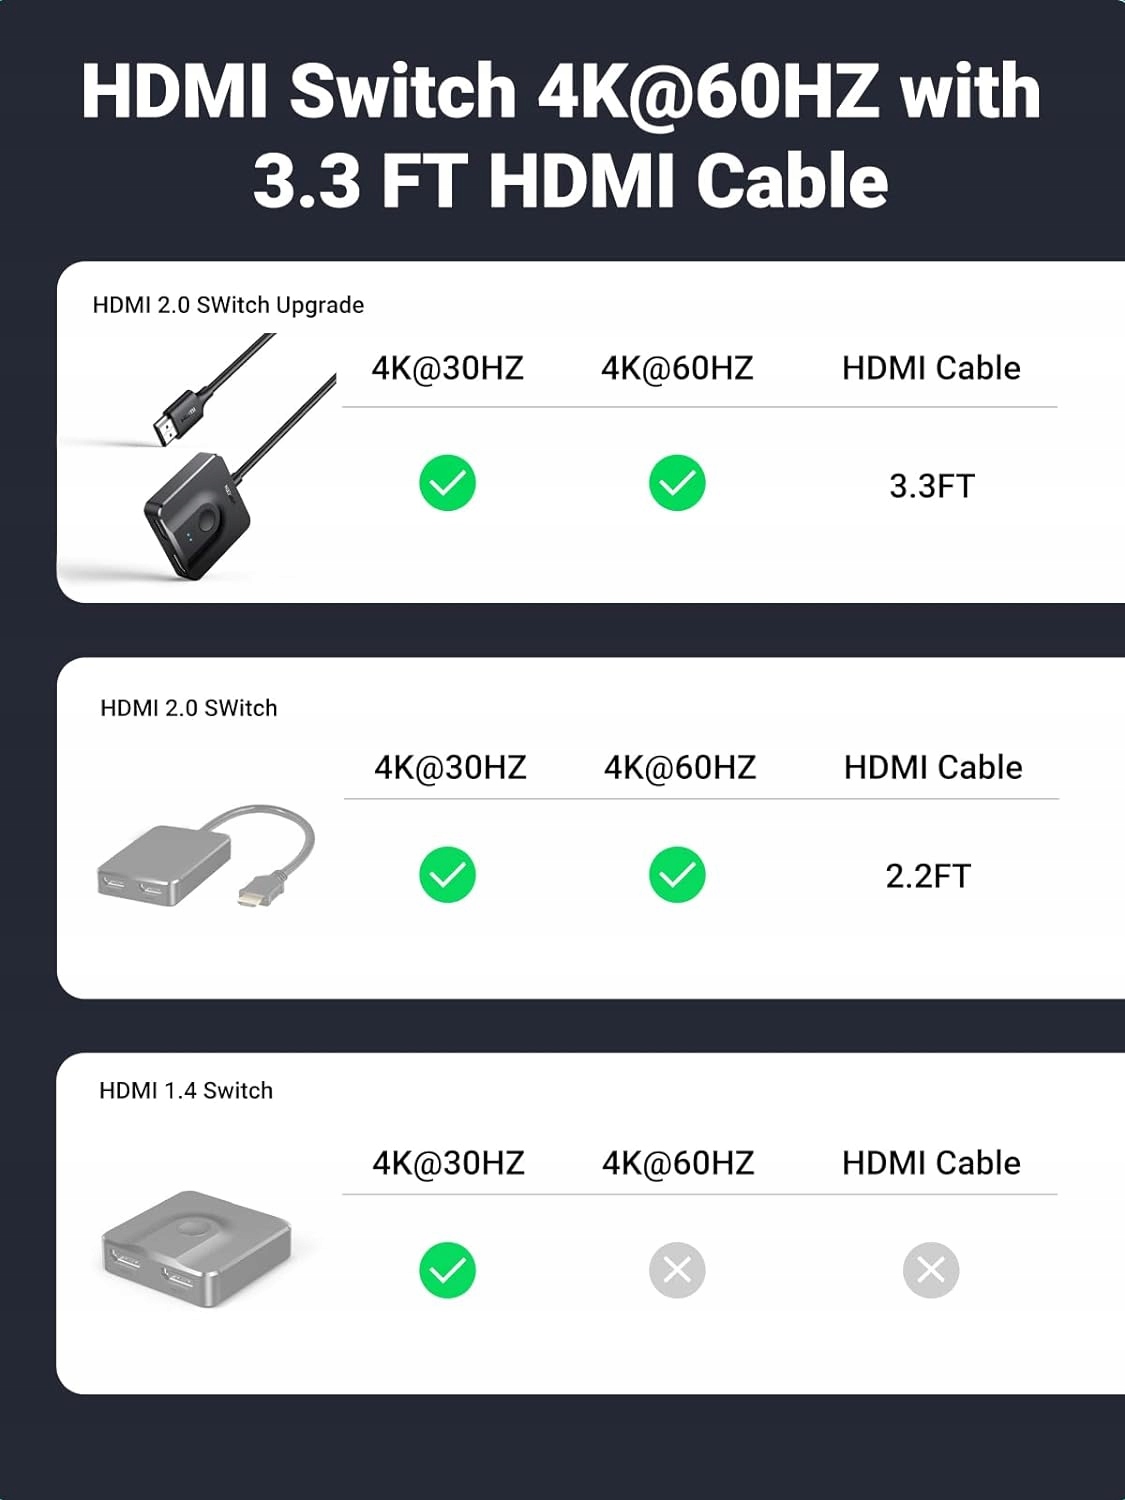 HDMI Splitter - 8-Port - 3D 1080P - HDMI Splitter 1 In 8 Out - 8 Way HDMI  Splitter - HDMI Port Splitter -For PS 3/4, Xbox, HDTVs, projectors, PC